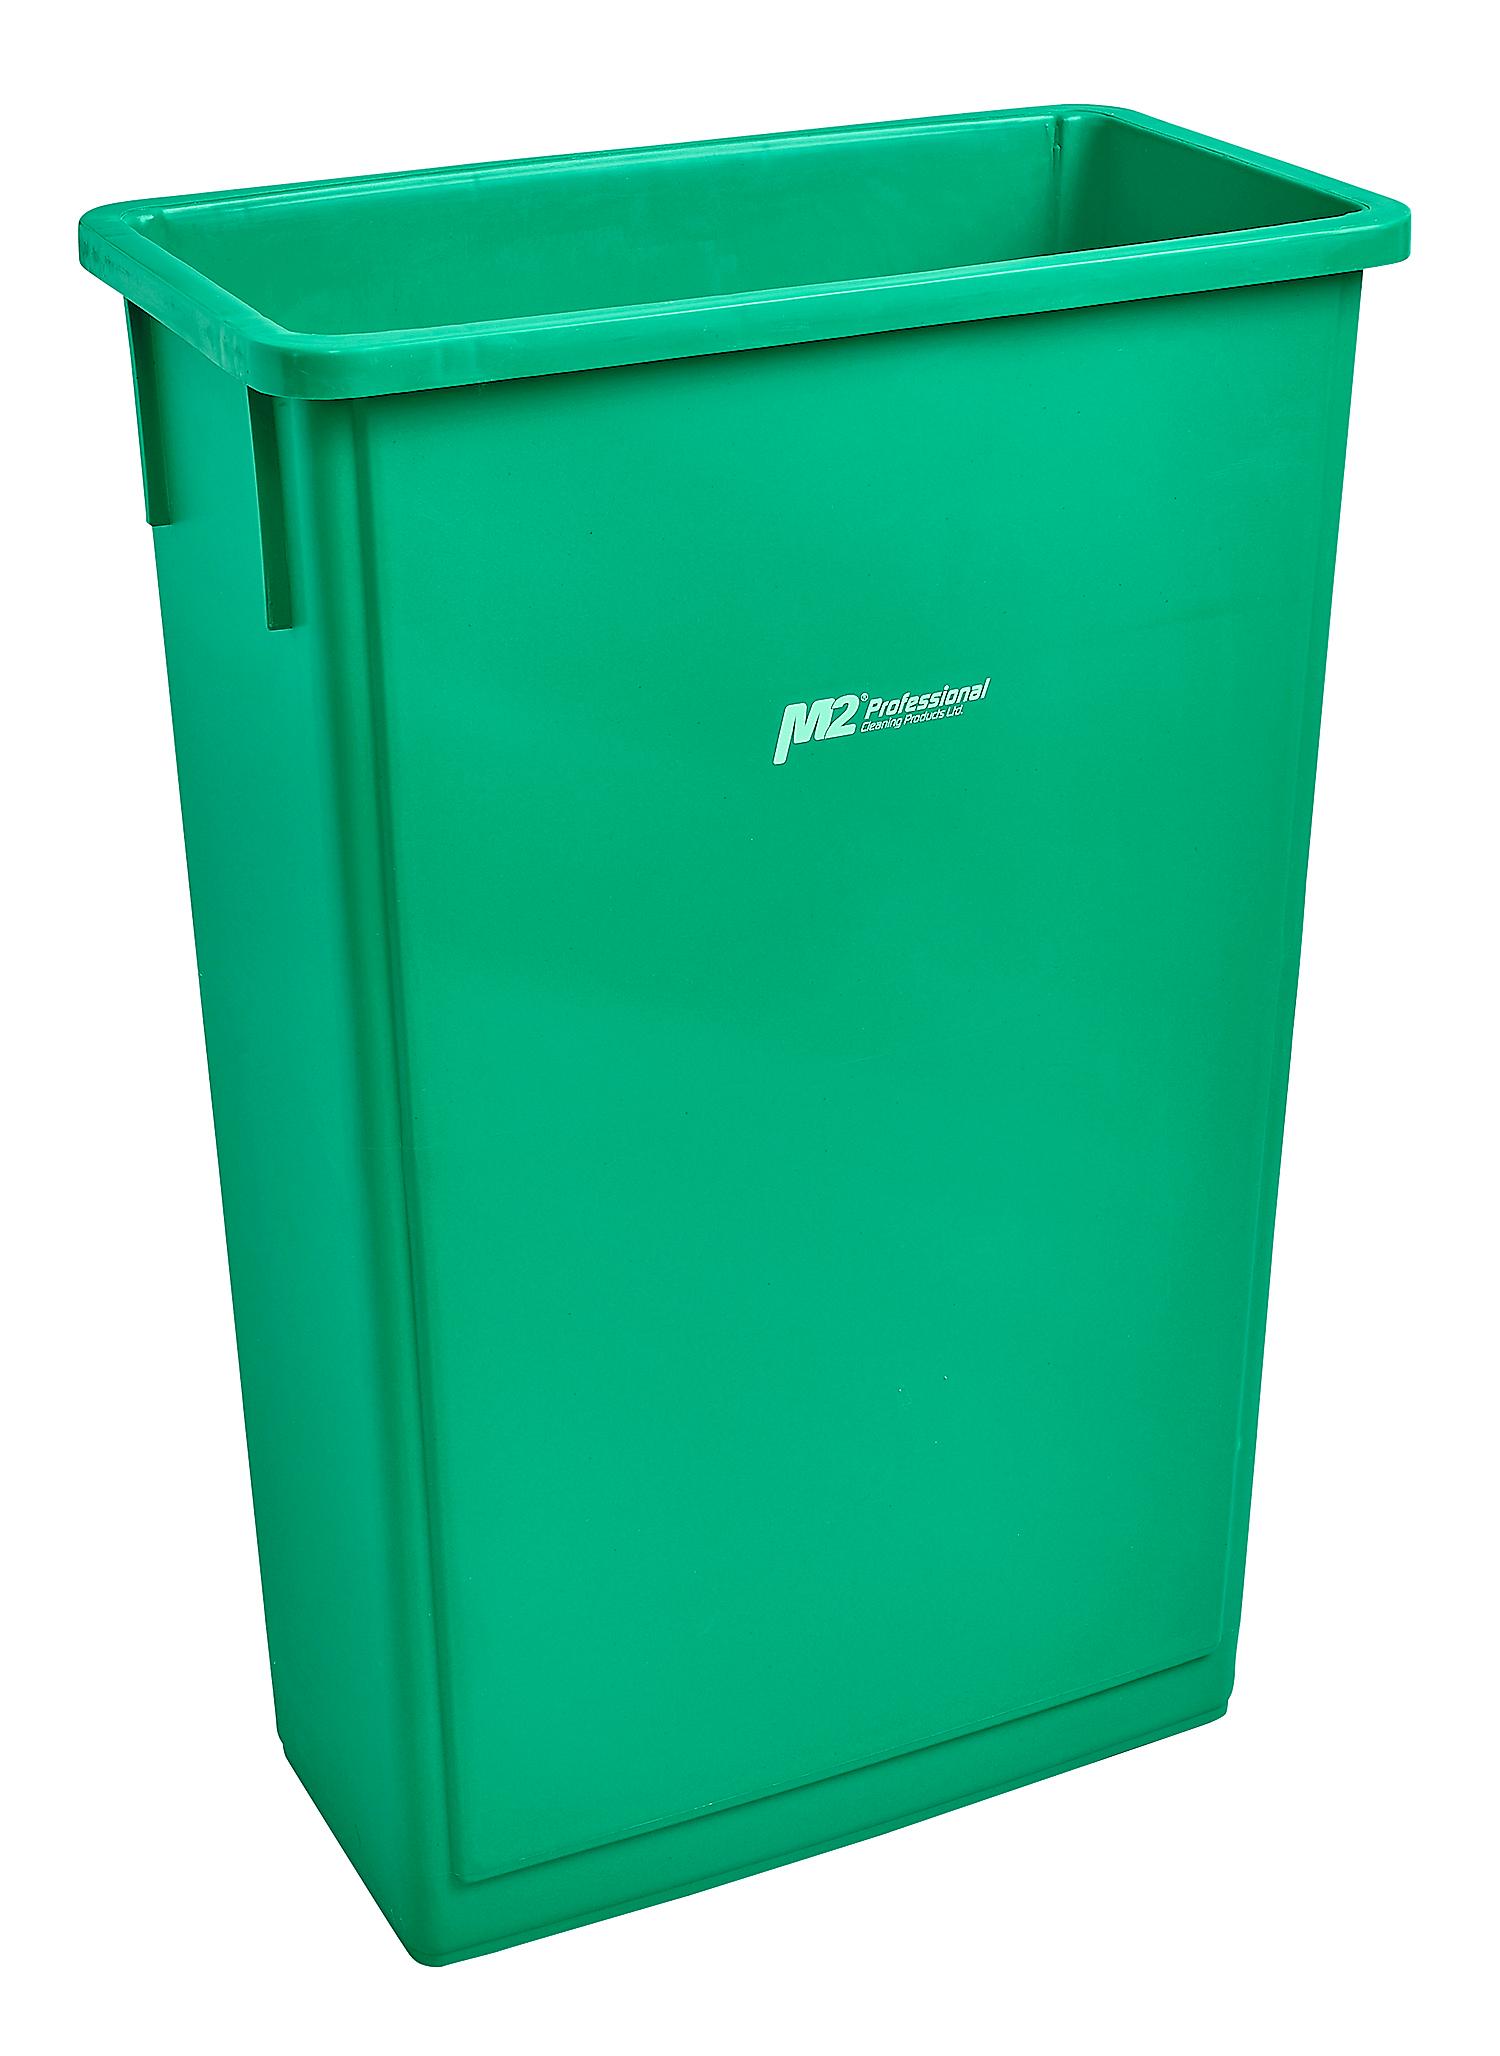 WM-PR2323-GN - 23gal Slim Garbage Container - Green